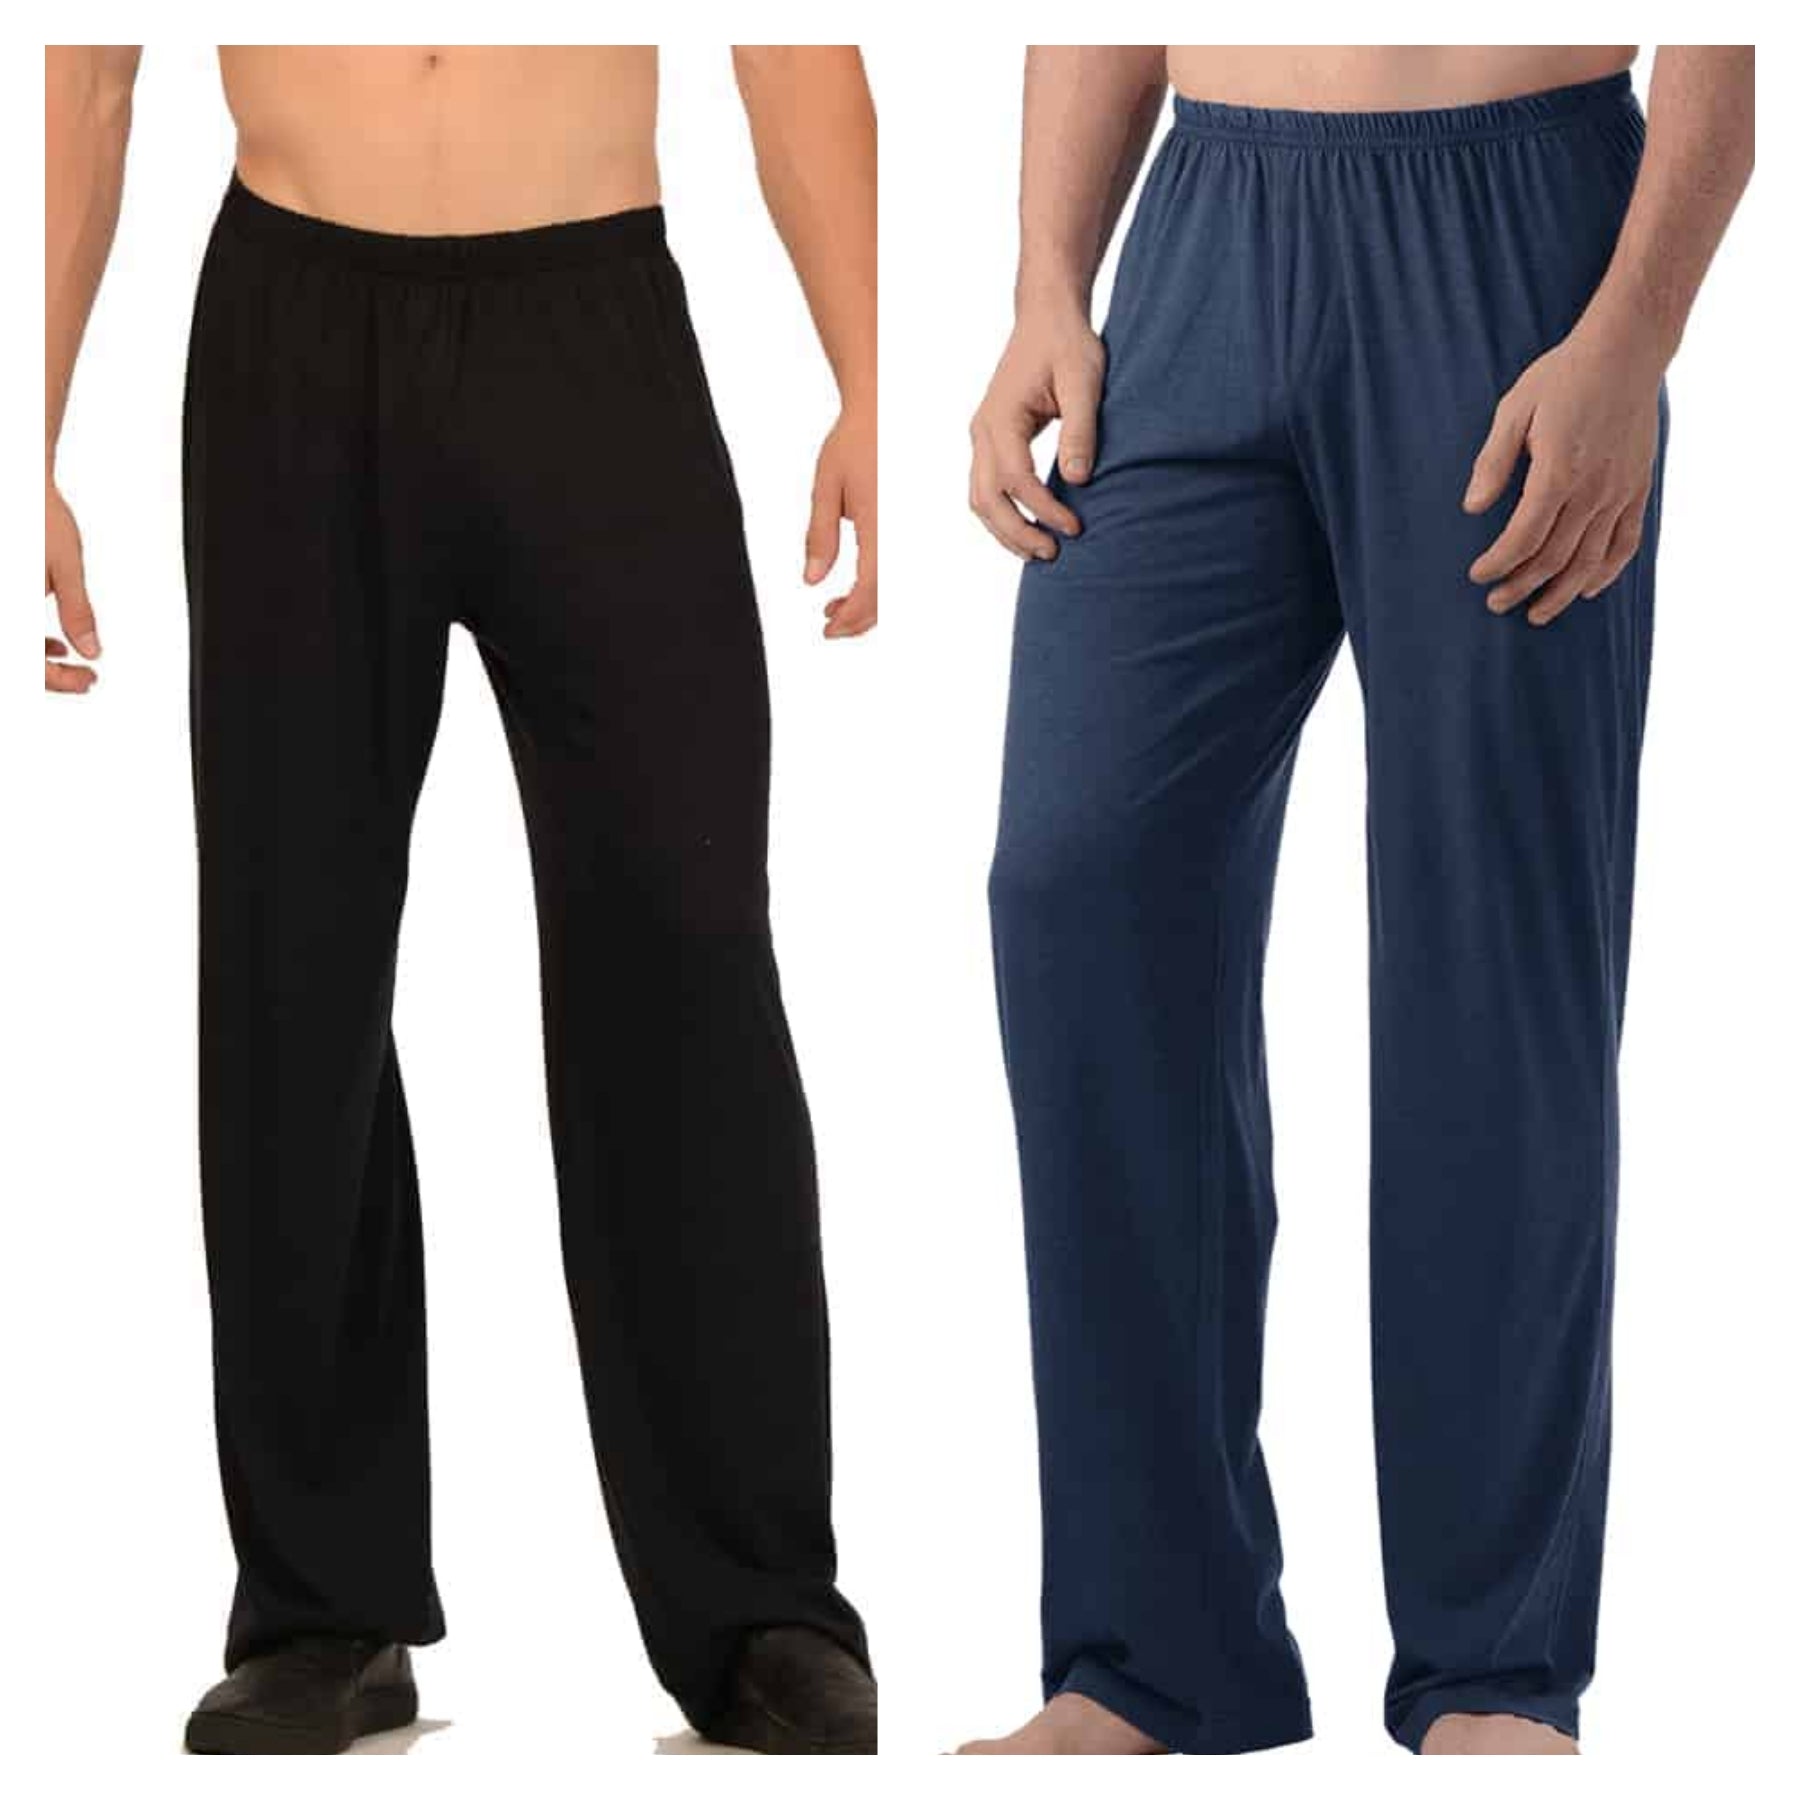  Boisouey Men's Cotton Yoga Sweatpants Open Bottom